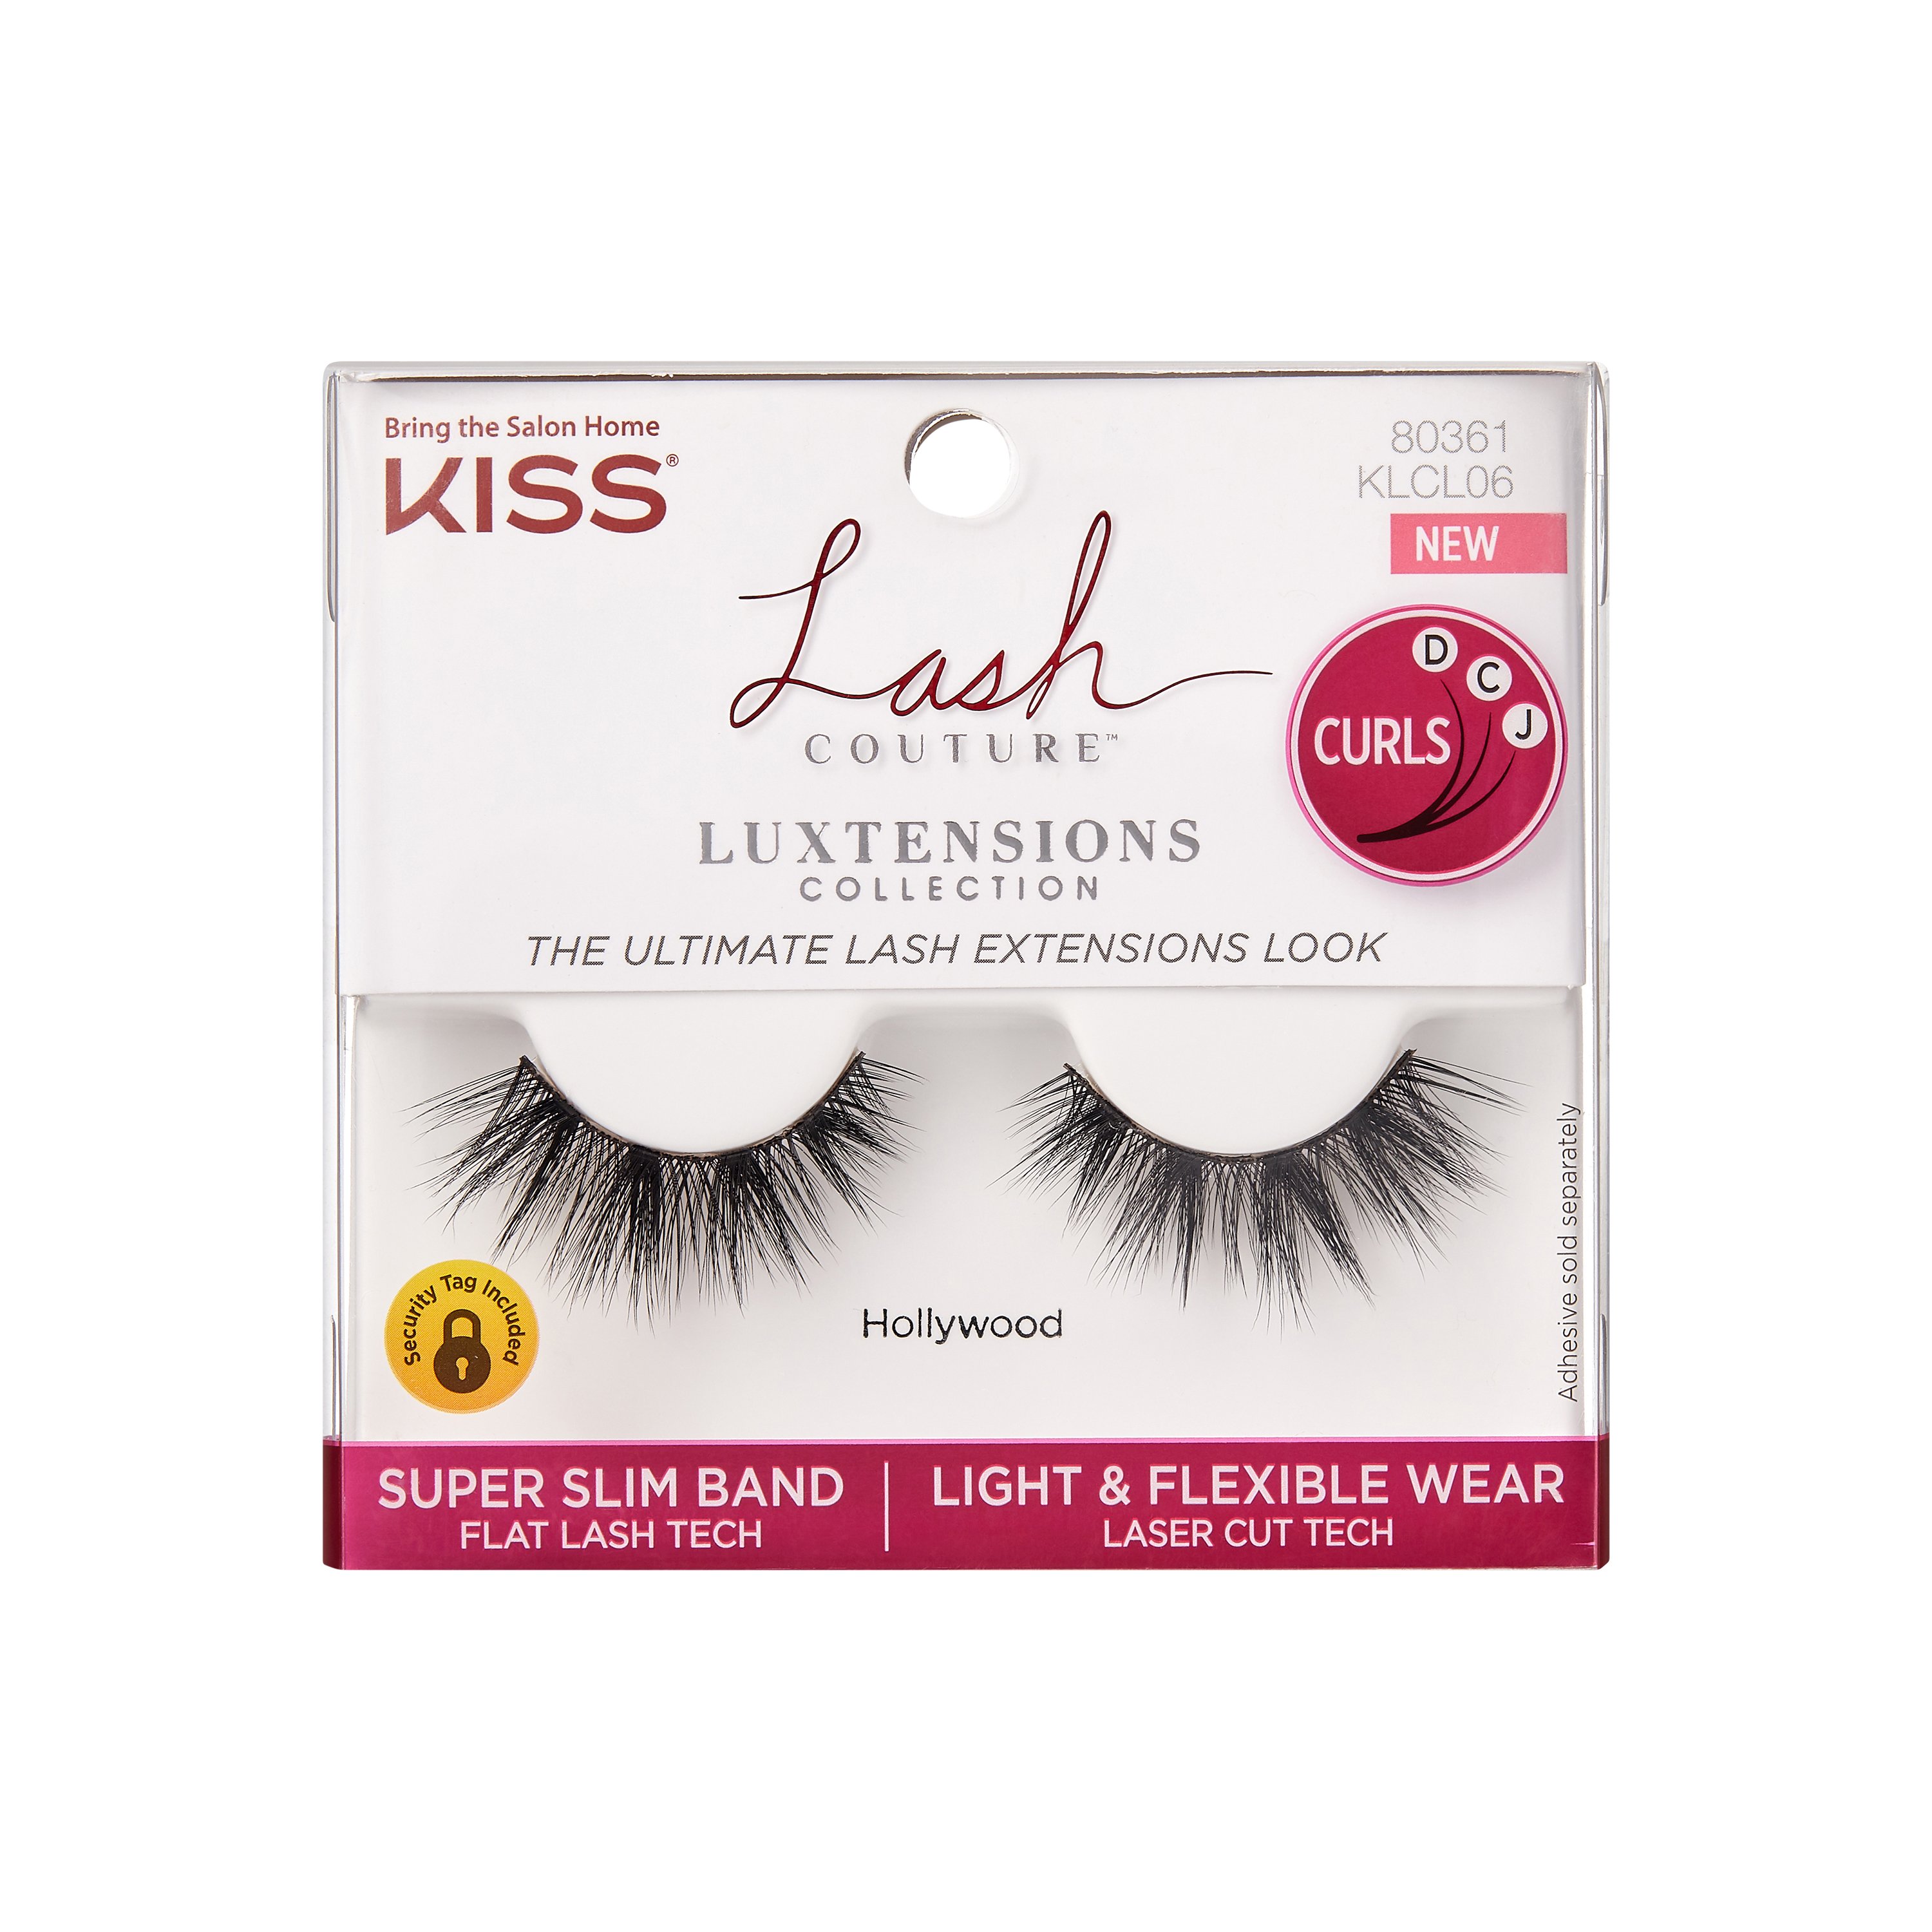 KISS Lash Couture Luxtensions - Hollywood - Shop False Eyelashes at H-E-B